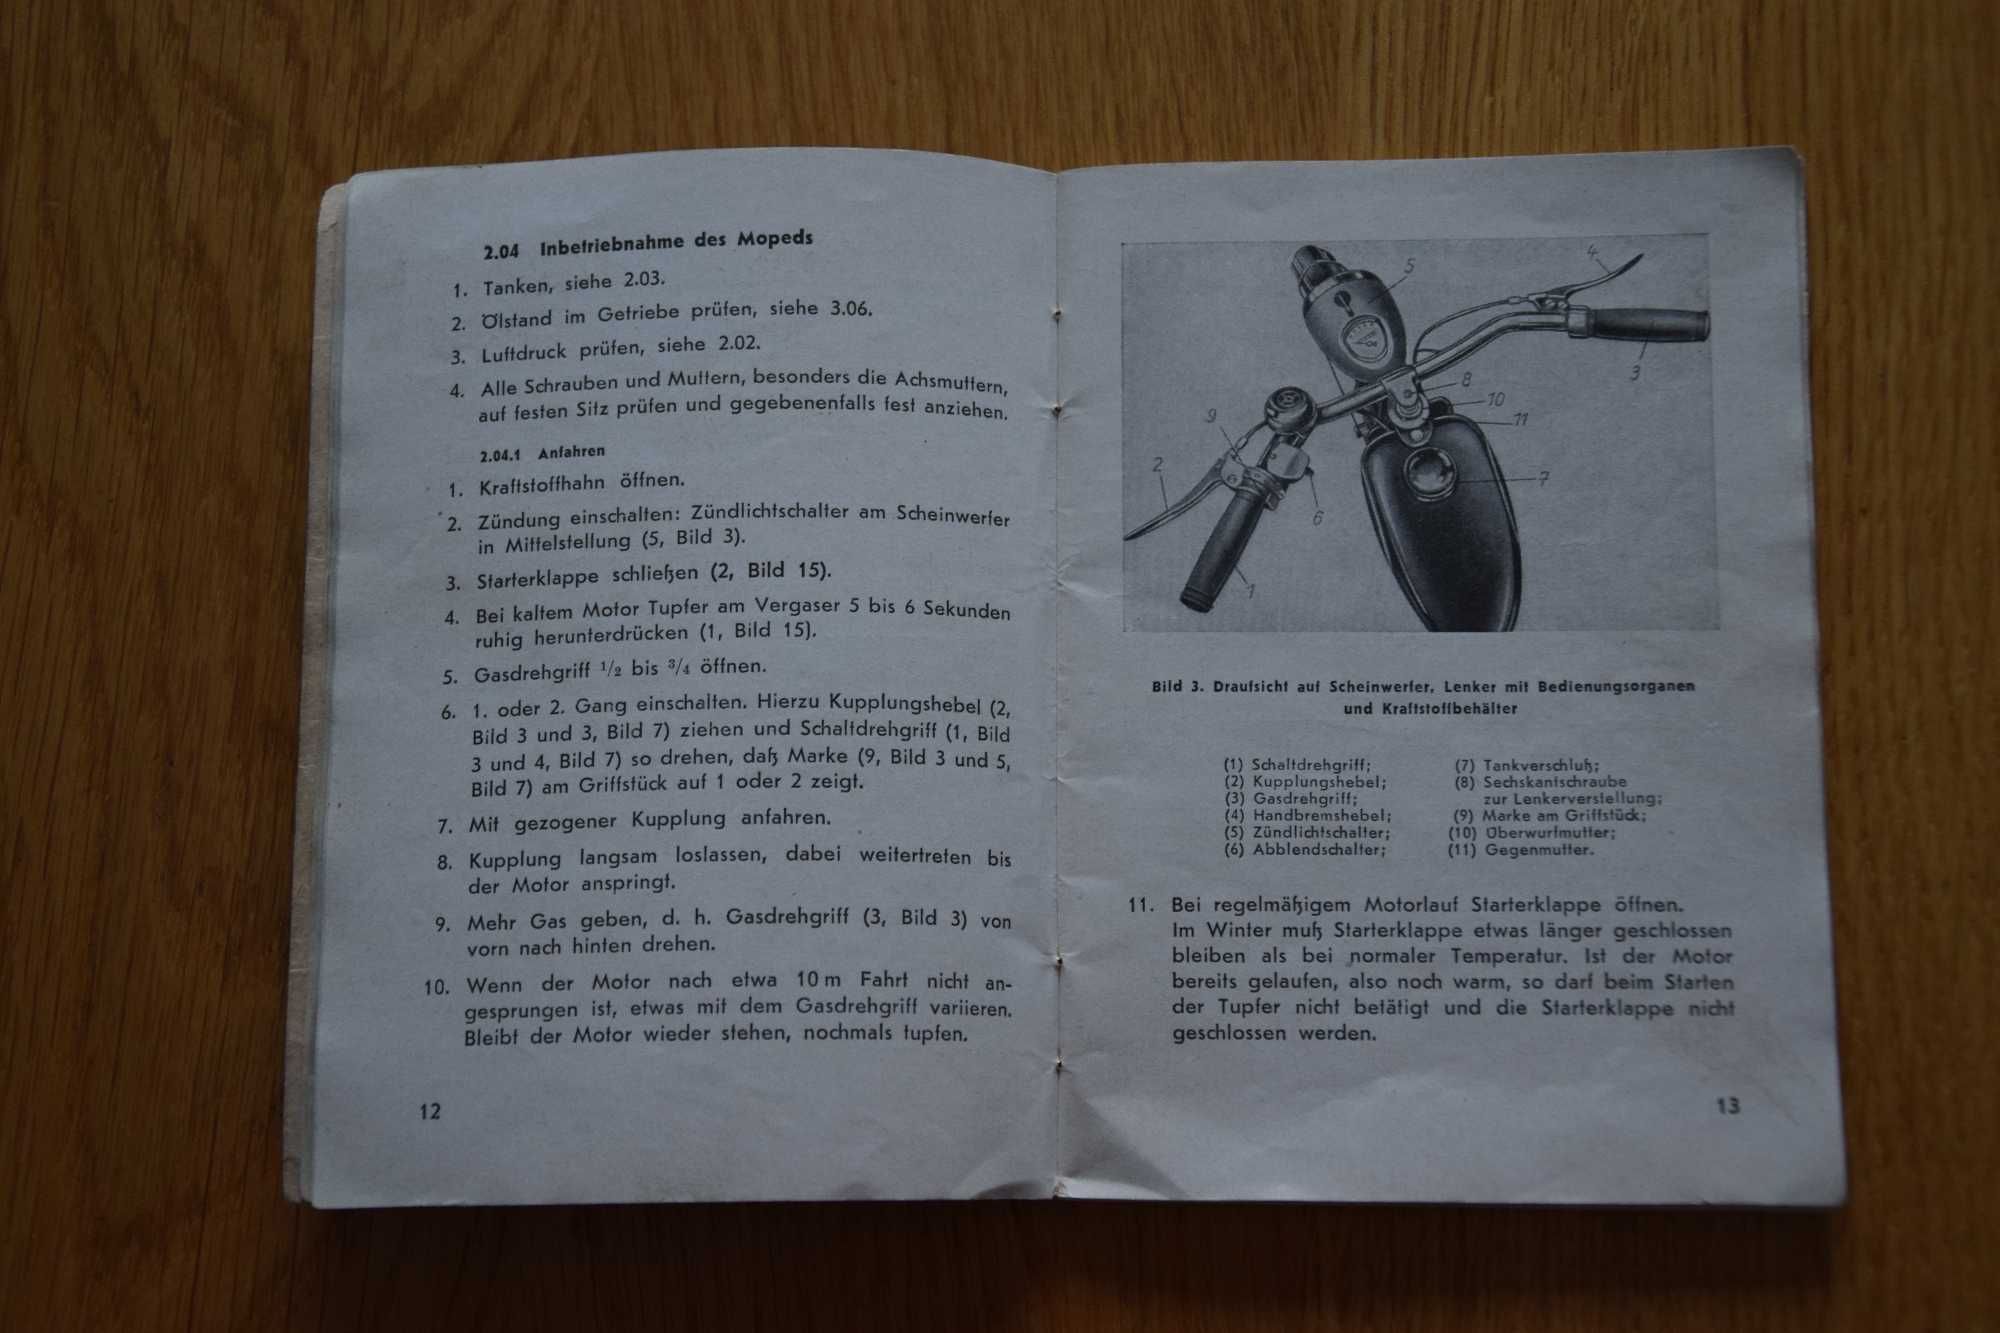 Instrukcja Katalog SIMSON SR1 wsk shl jawa wfm romet komar